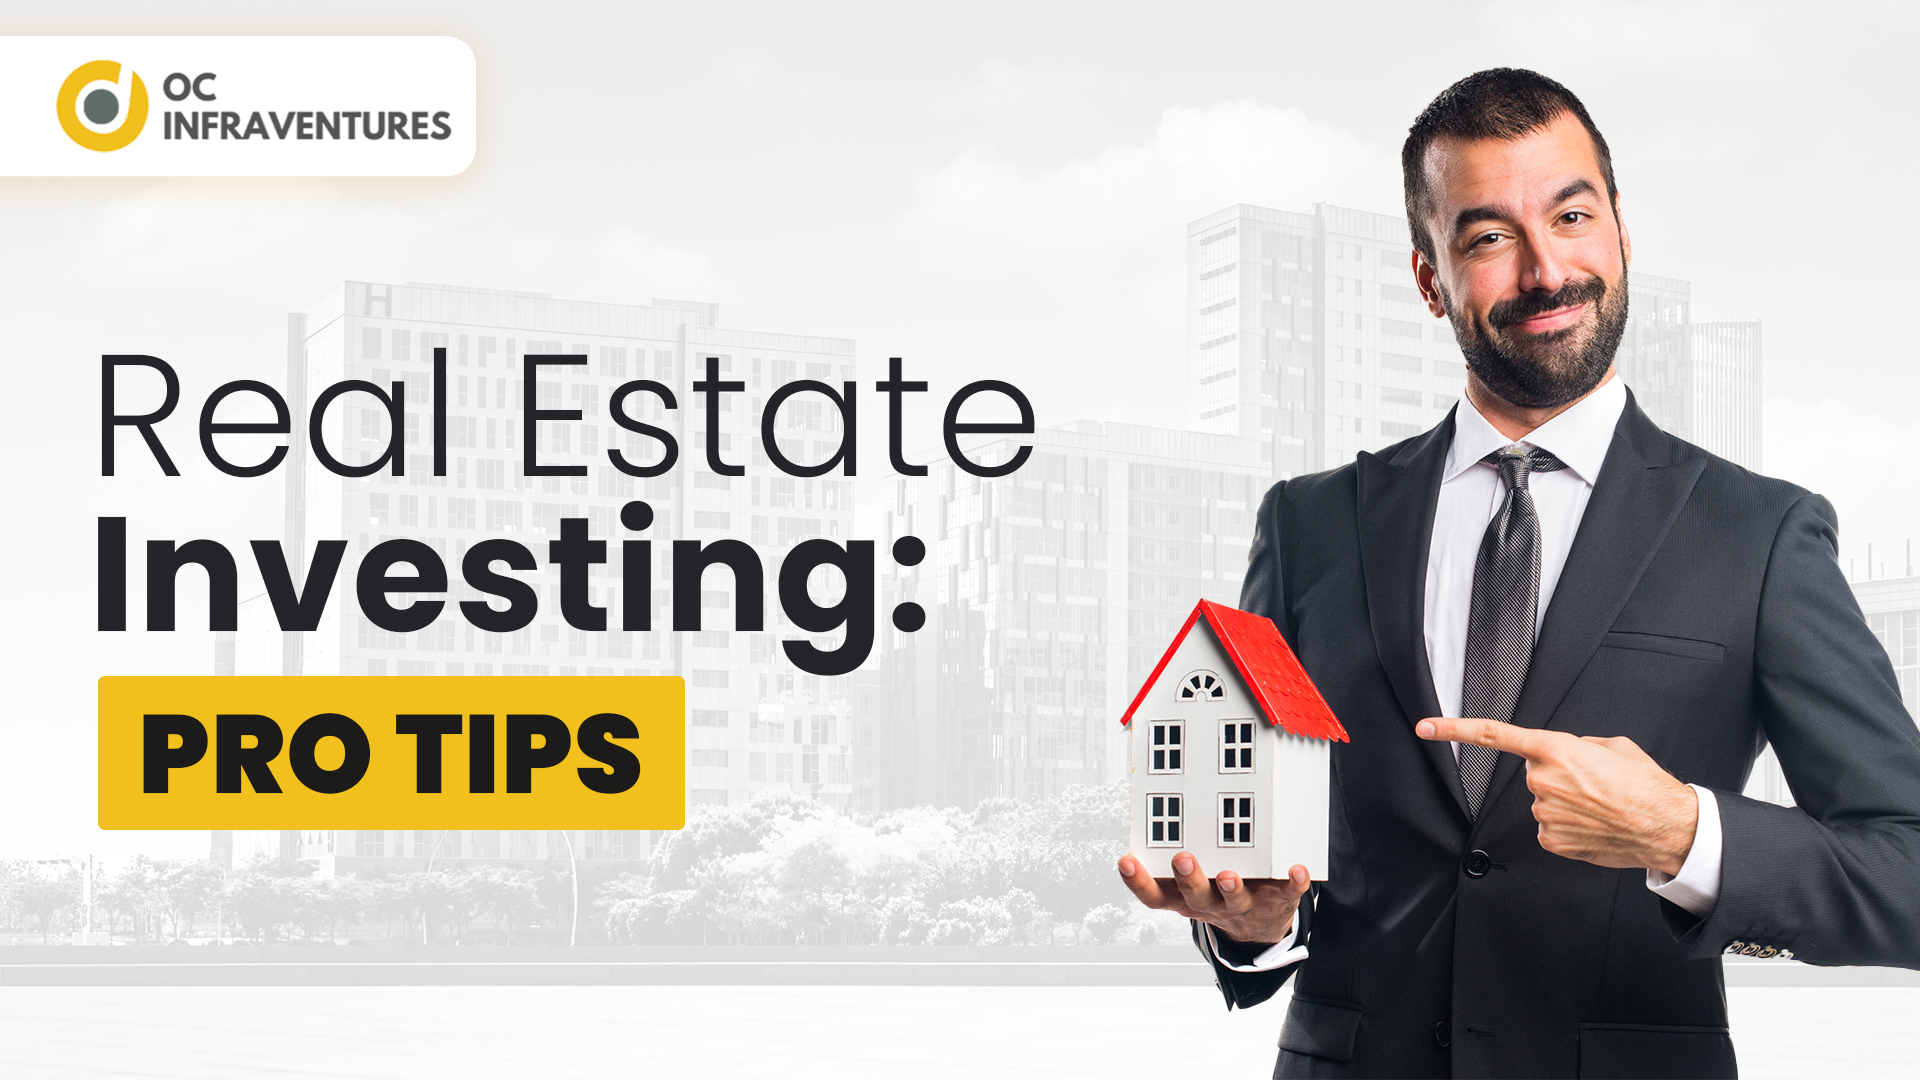 Real Estate Investing Pro Tips- OC Infraventures